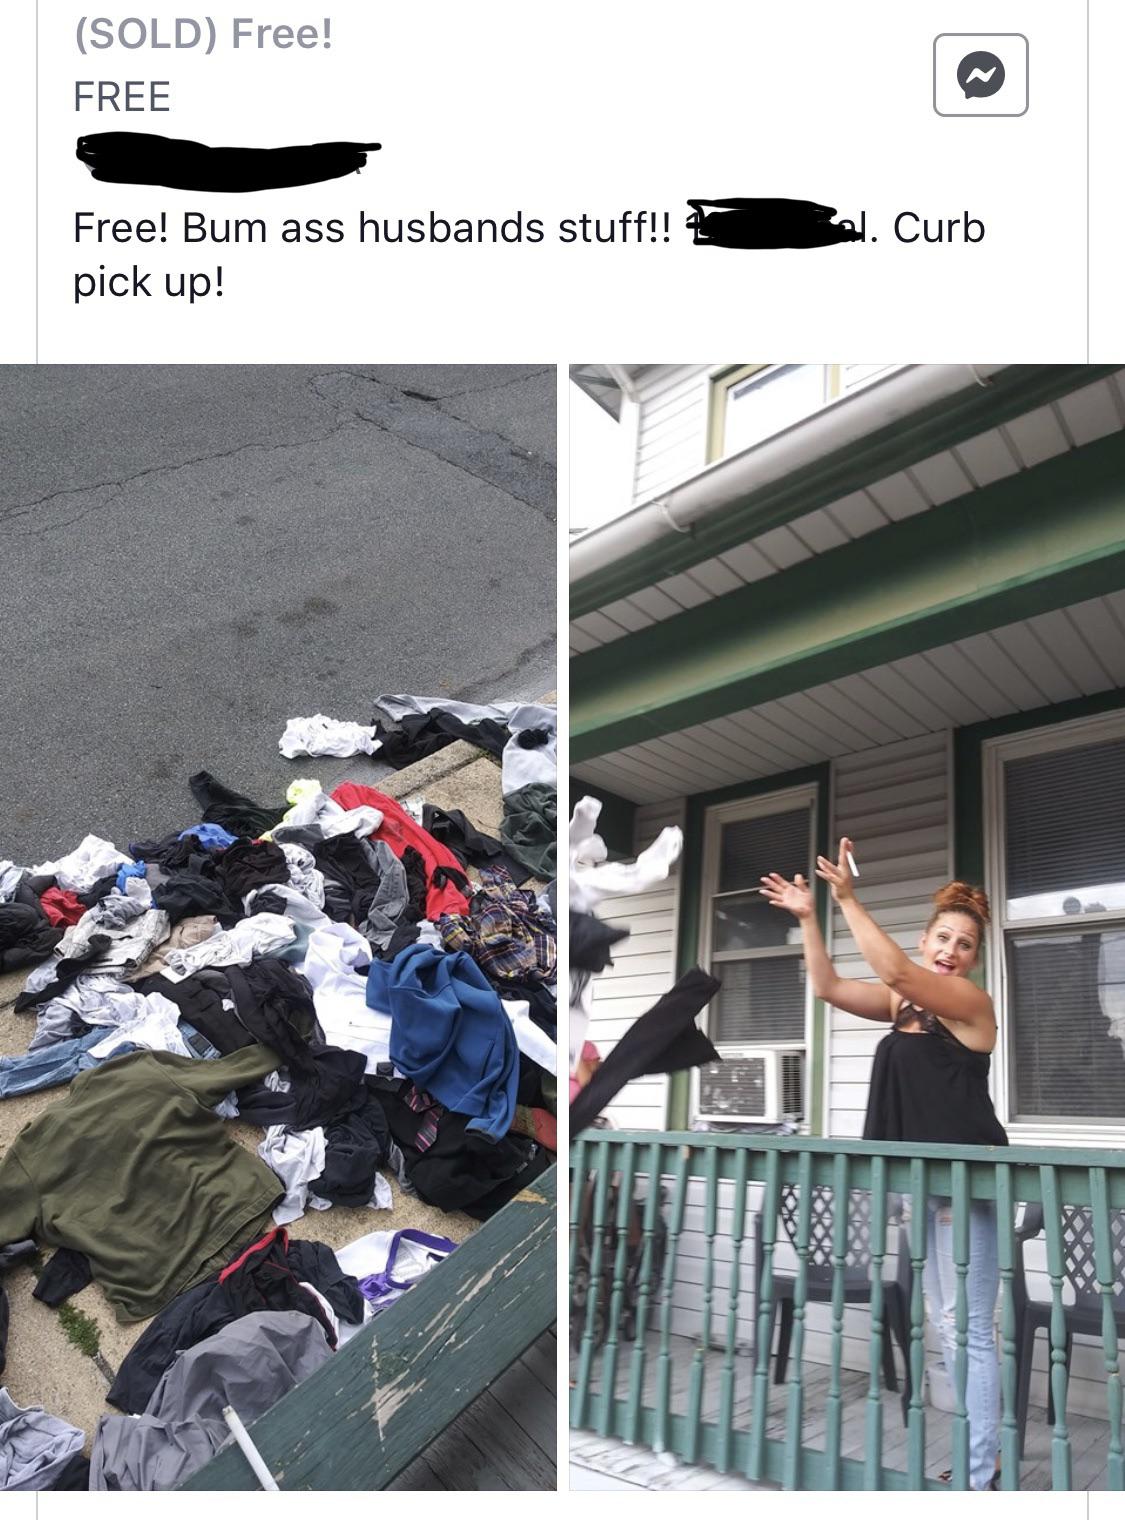 shoe - Sold Free! Free 1. Curb Free! Bum ass husbands stuff!! pick up!